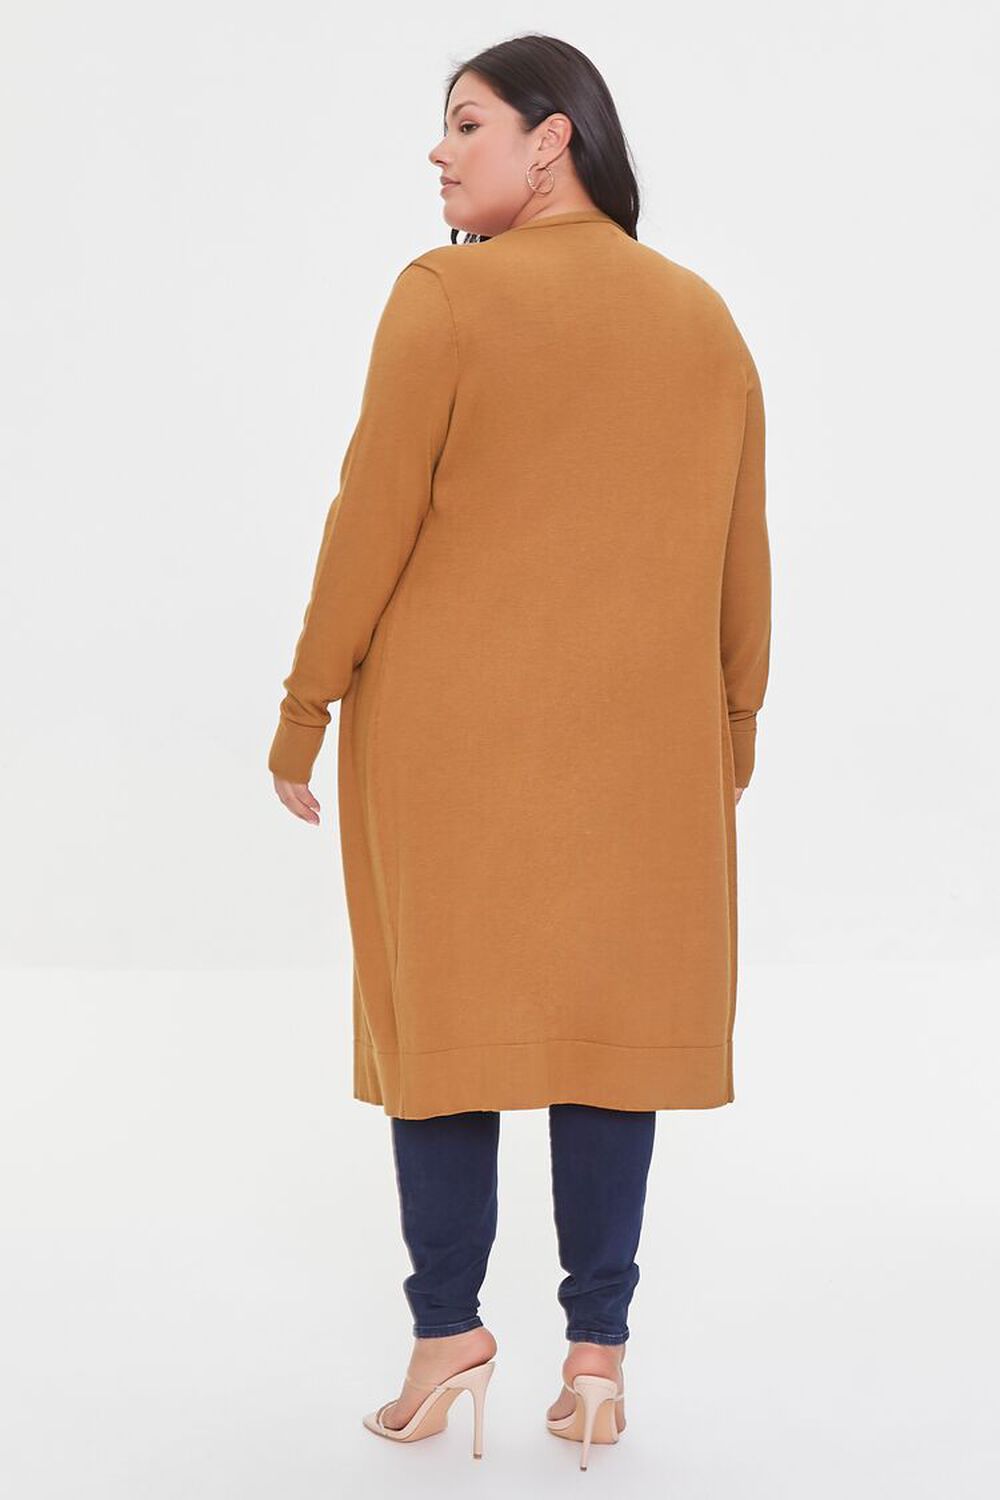 GINGER Plus Size Longline Cardigan Sweater, image 3